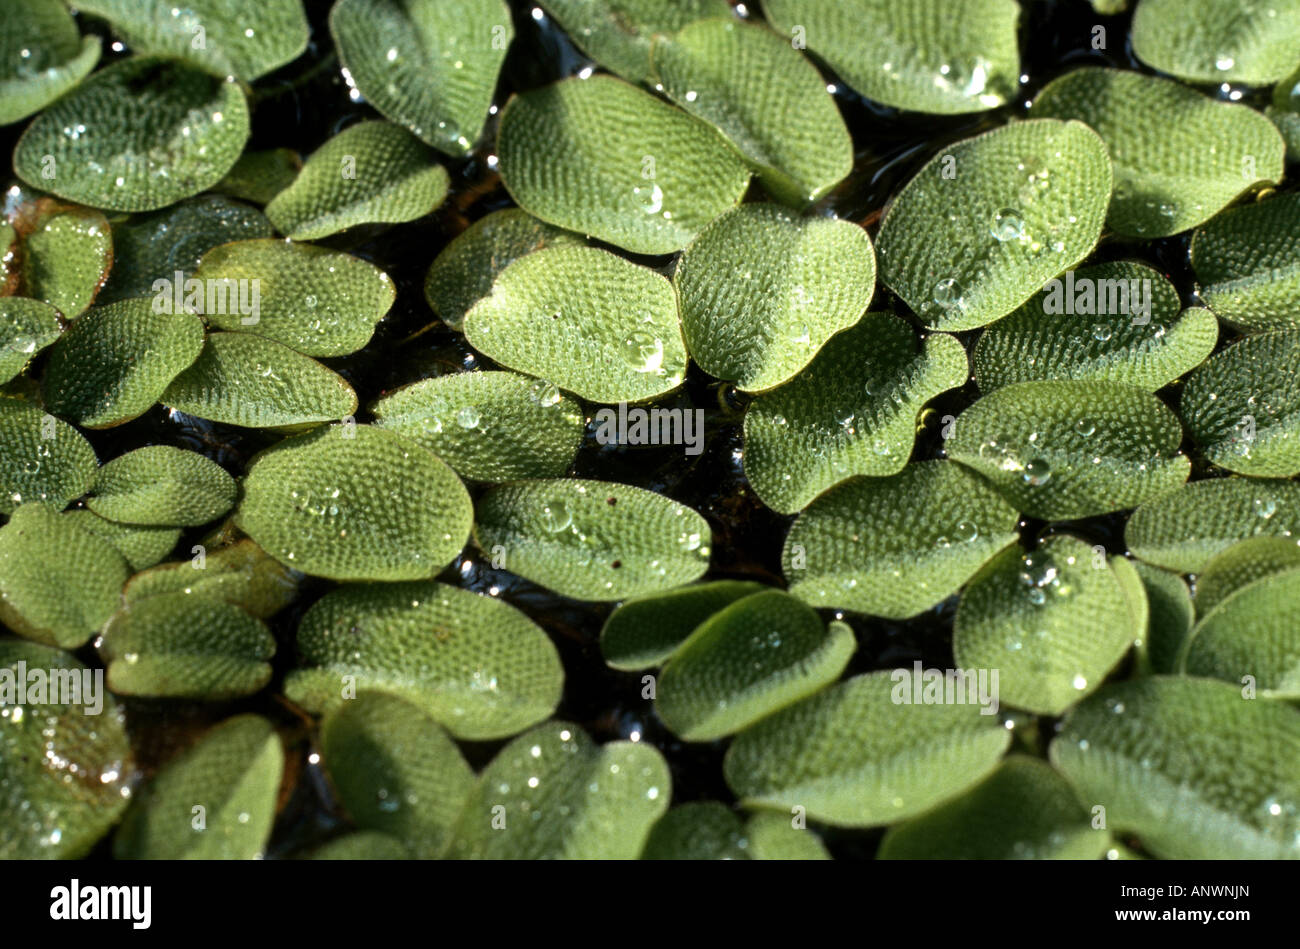 Giant salvinia, Kariba weed, water fern Salvinia molesta, floating leaves Stock Photo